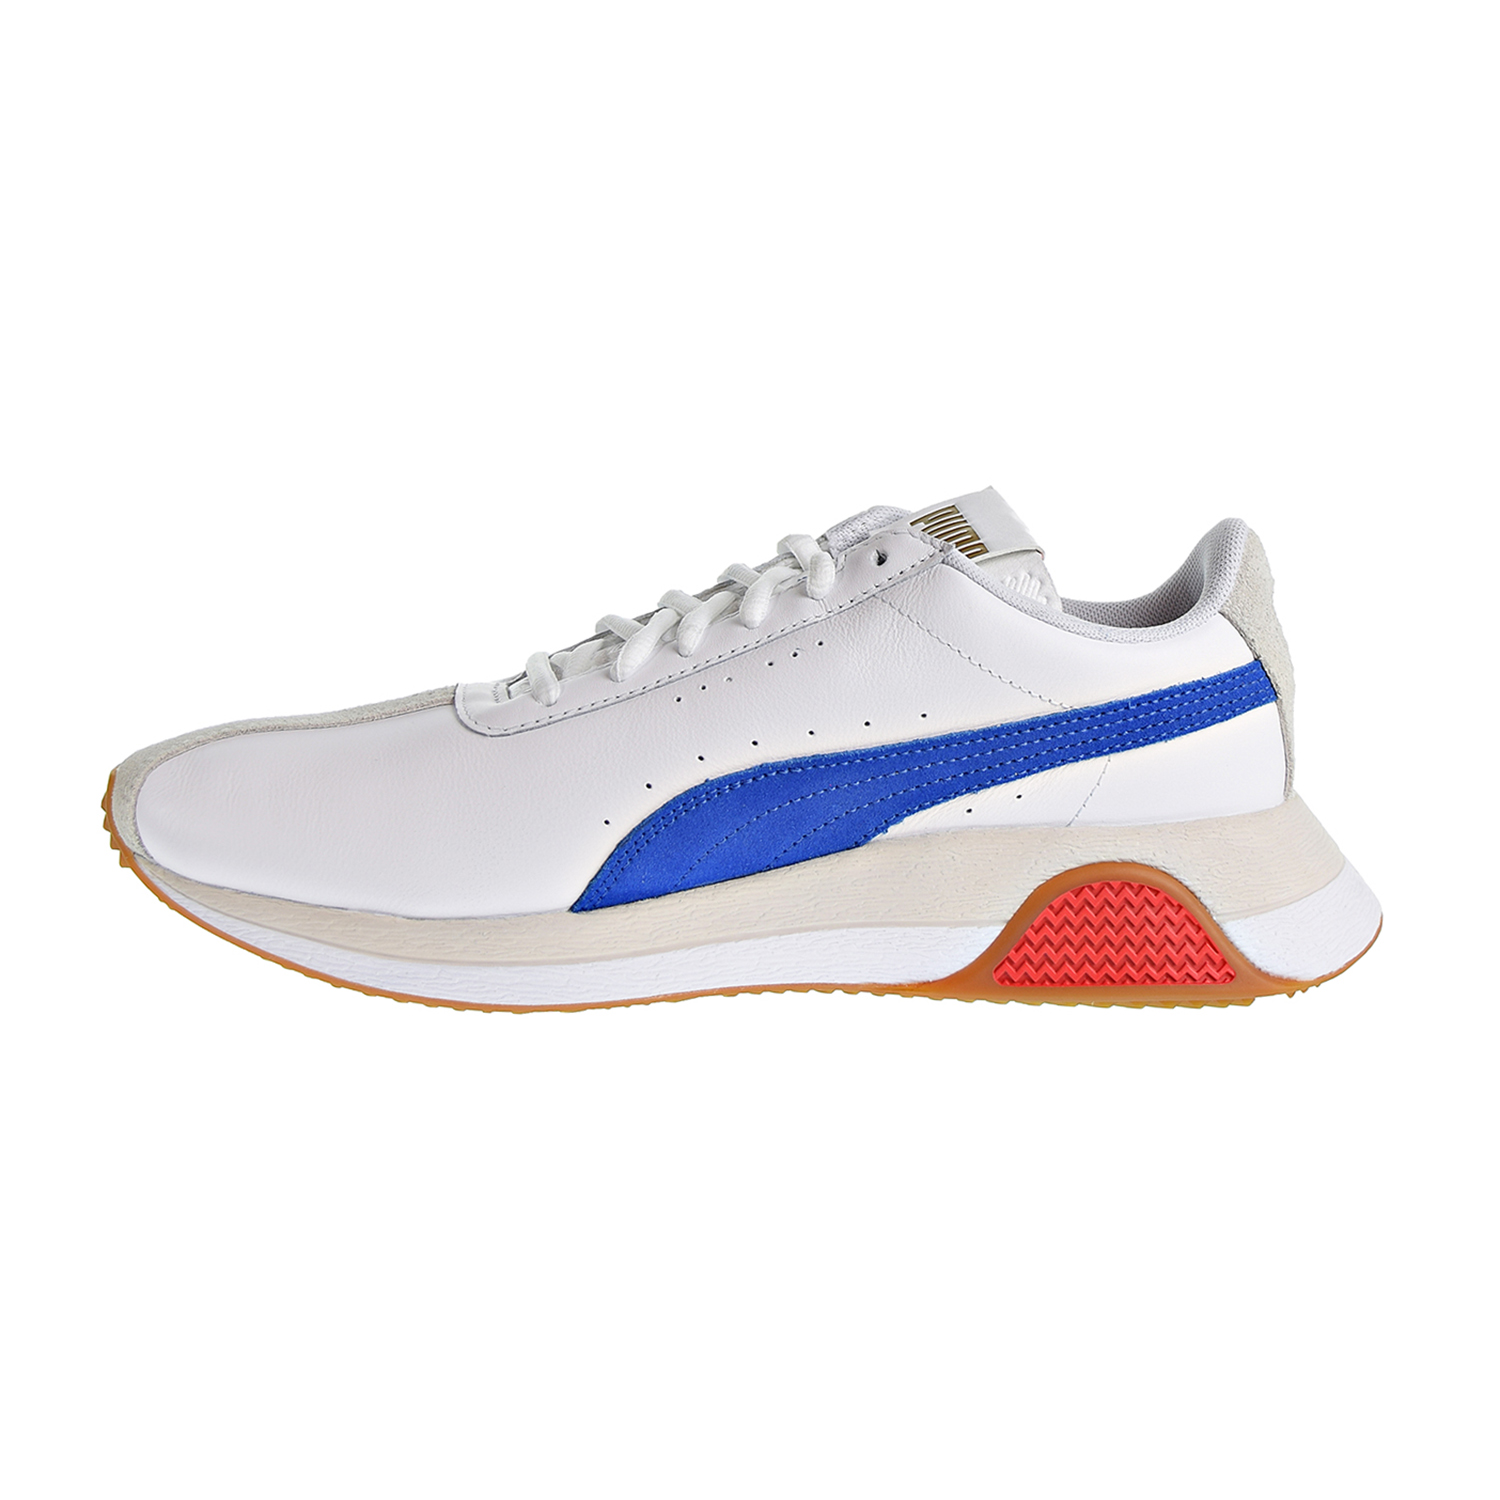 Puma Turin_0 Men's Shoes Puma White/Turkish Sea/High Risk Red 367794-01 - image 4 of 6